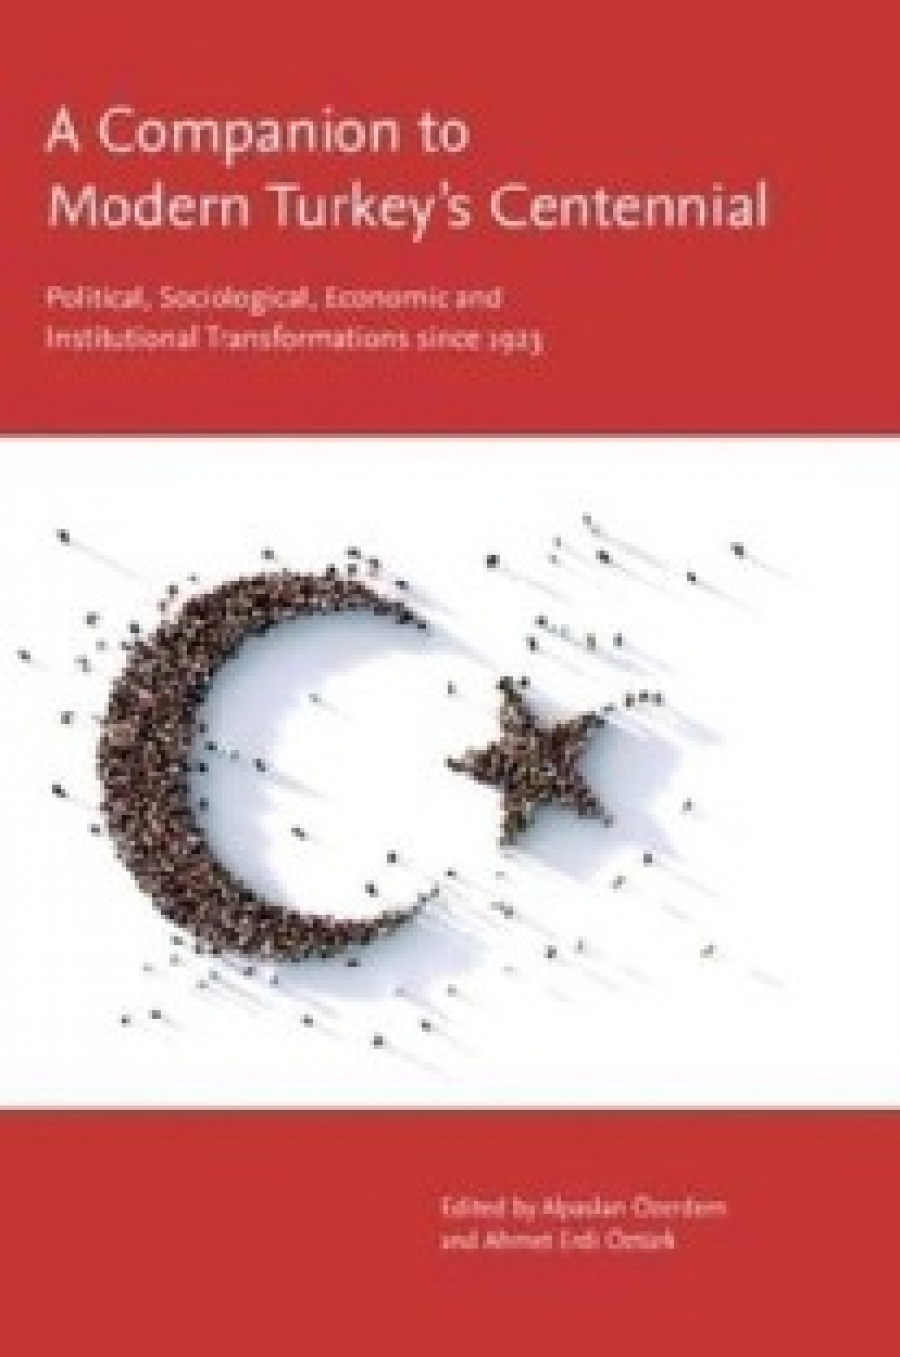 Alpaslan Ozerdem and Ahmet Erdi Ozturk Companion to modern turkey's centennial: Political, Sociological, Economic and Institutional Transformations since 1923 